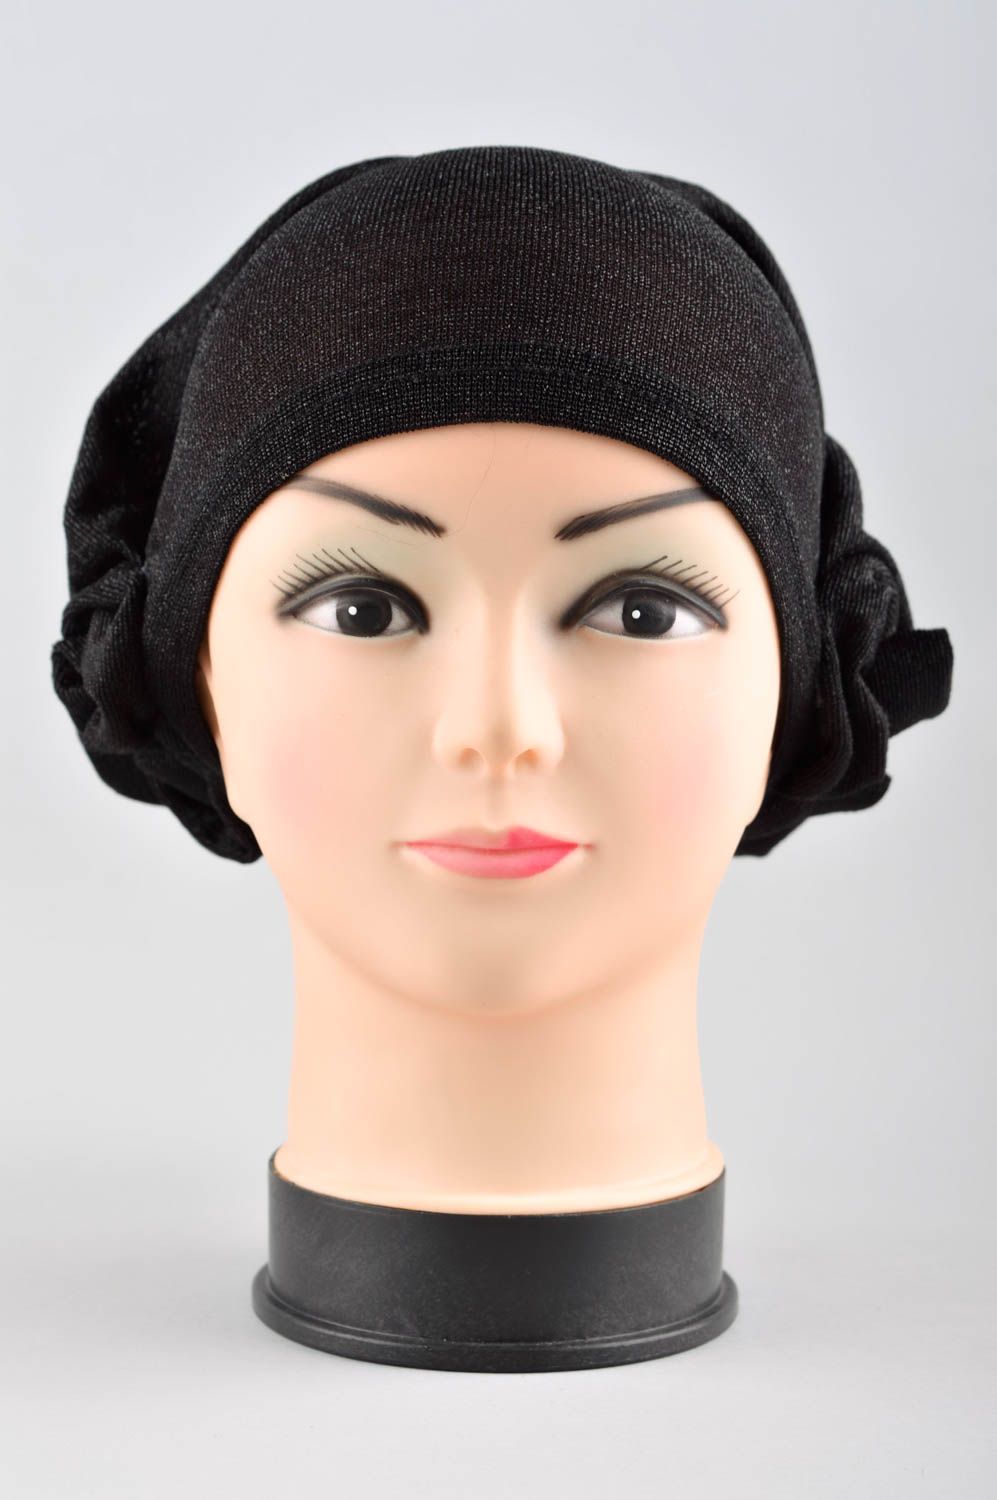 Handmade women hat winter hat winter accessories for girls stylish warm hat photo 1